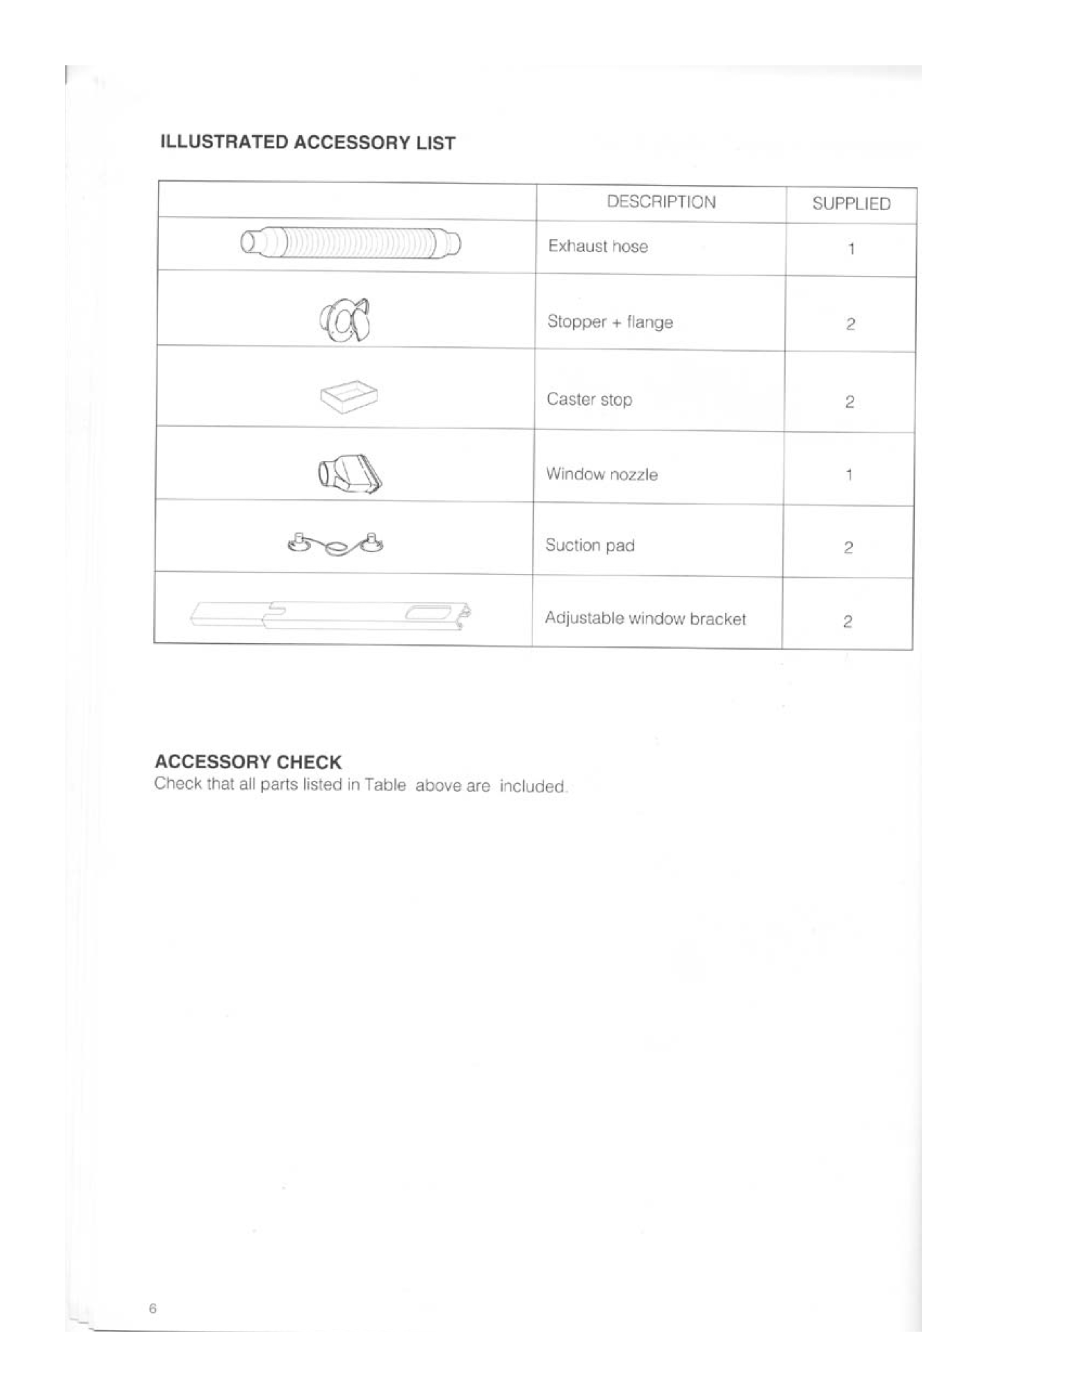 DeLonghi PAC 02 manual 